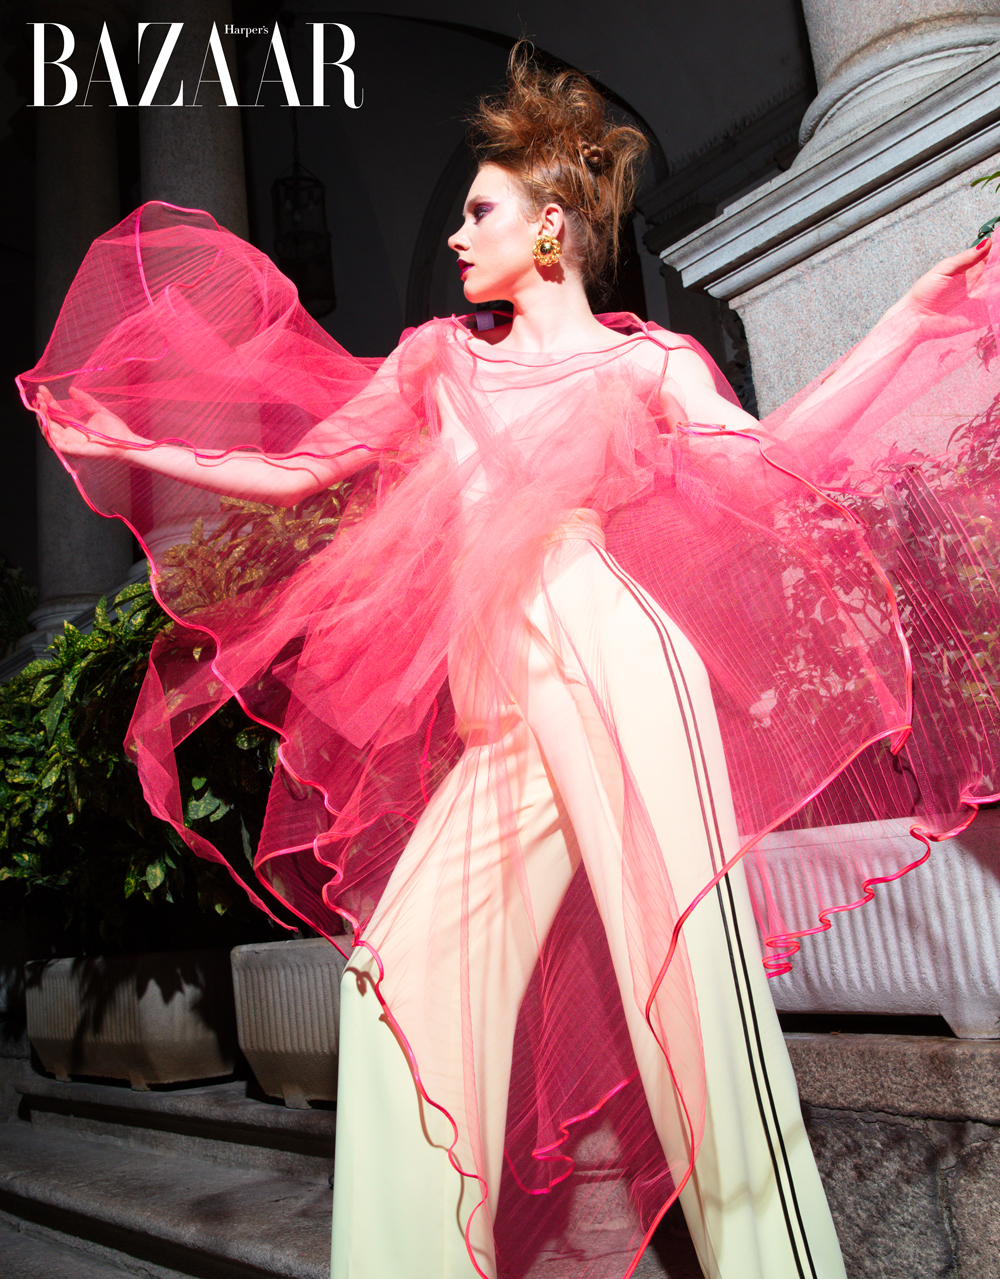 Alicja Ciżkowicz models for "The Runaway Bride" by photographer Timo S. Saari 6